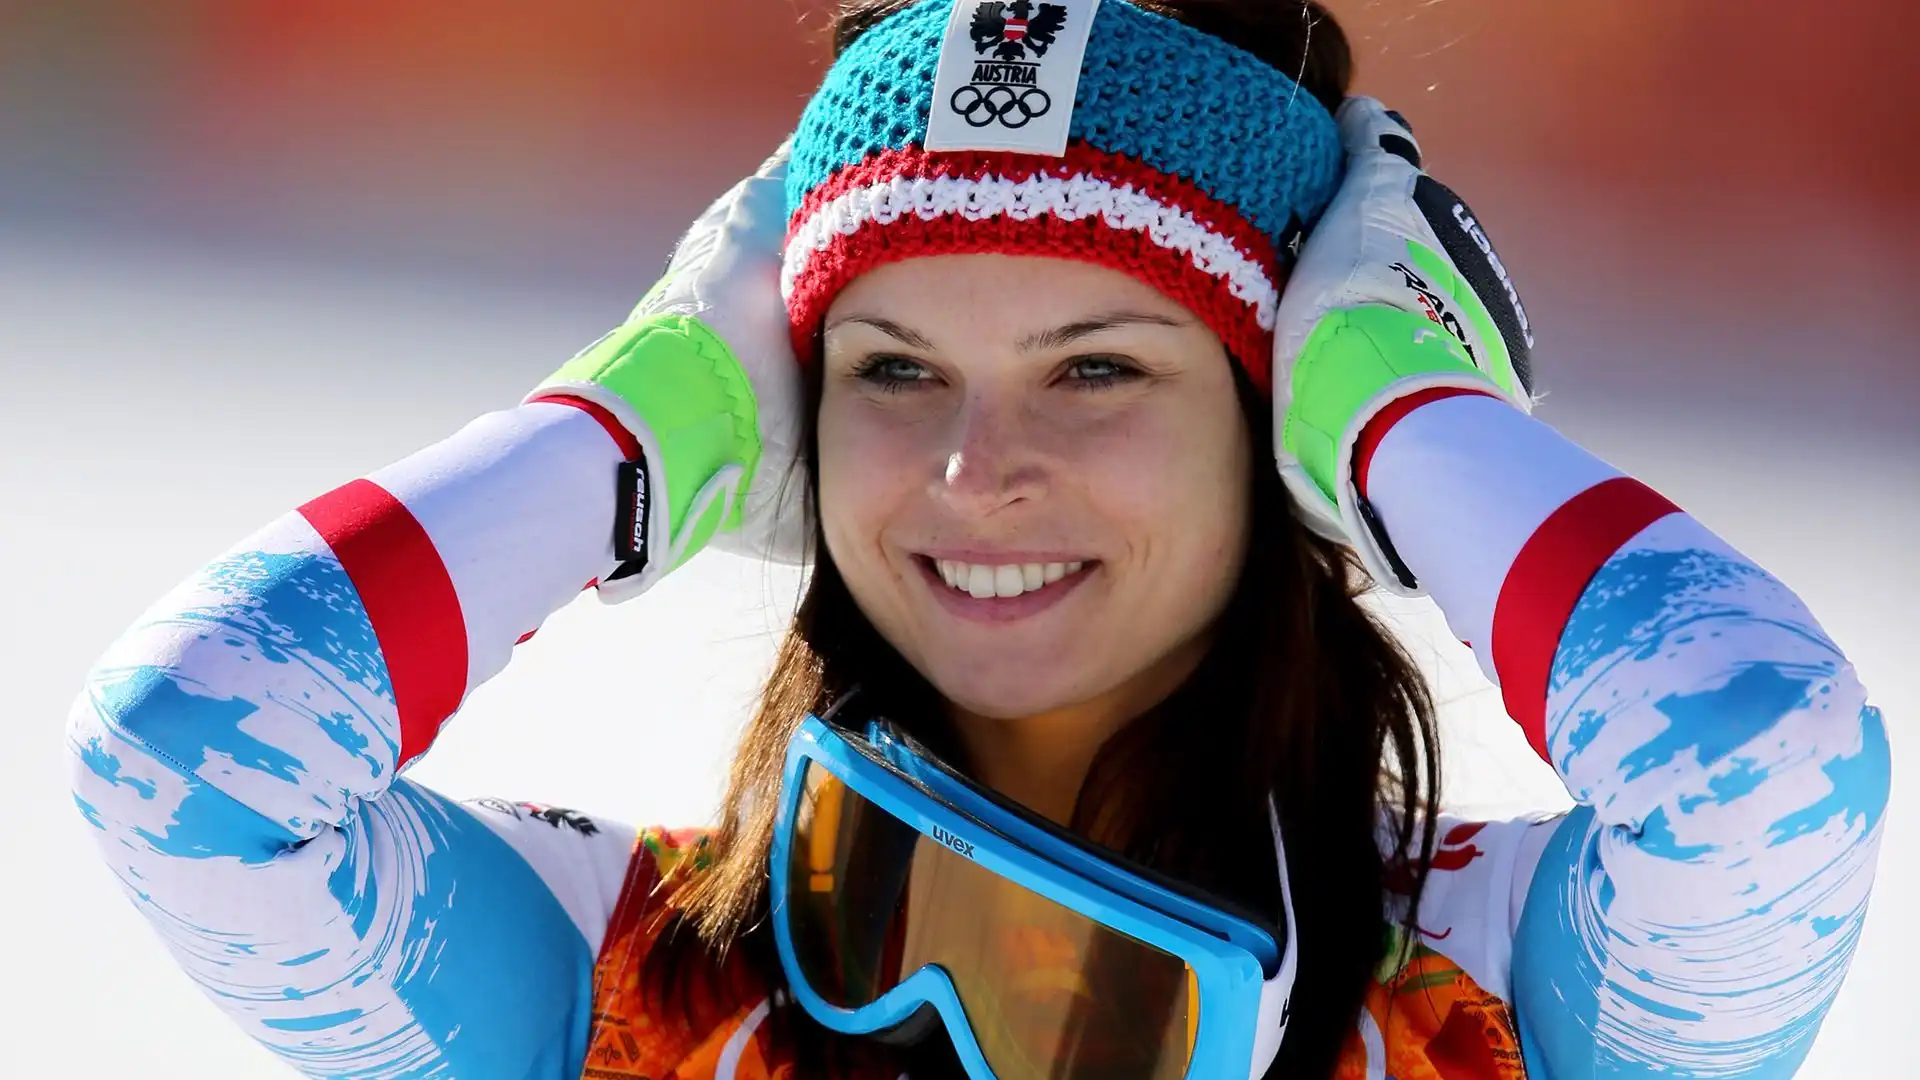 Ai giochi olimpici ha vinto 3 medaglie:1 oro (supergigante a Soci 2014) e2 argenti (slalom gigante a Soci 2014, supergigante a Pyeongchang 2018)